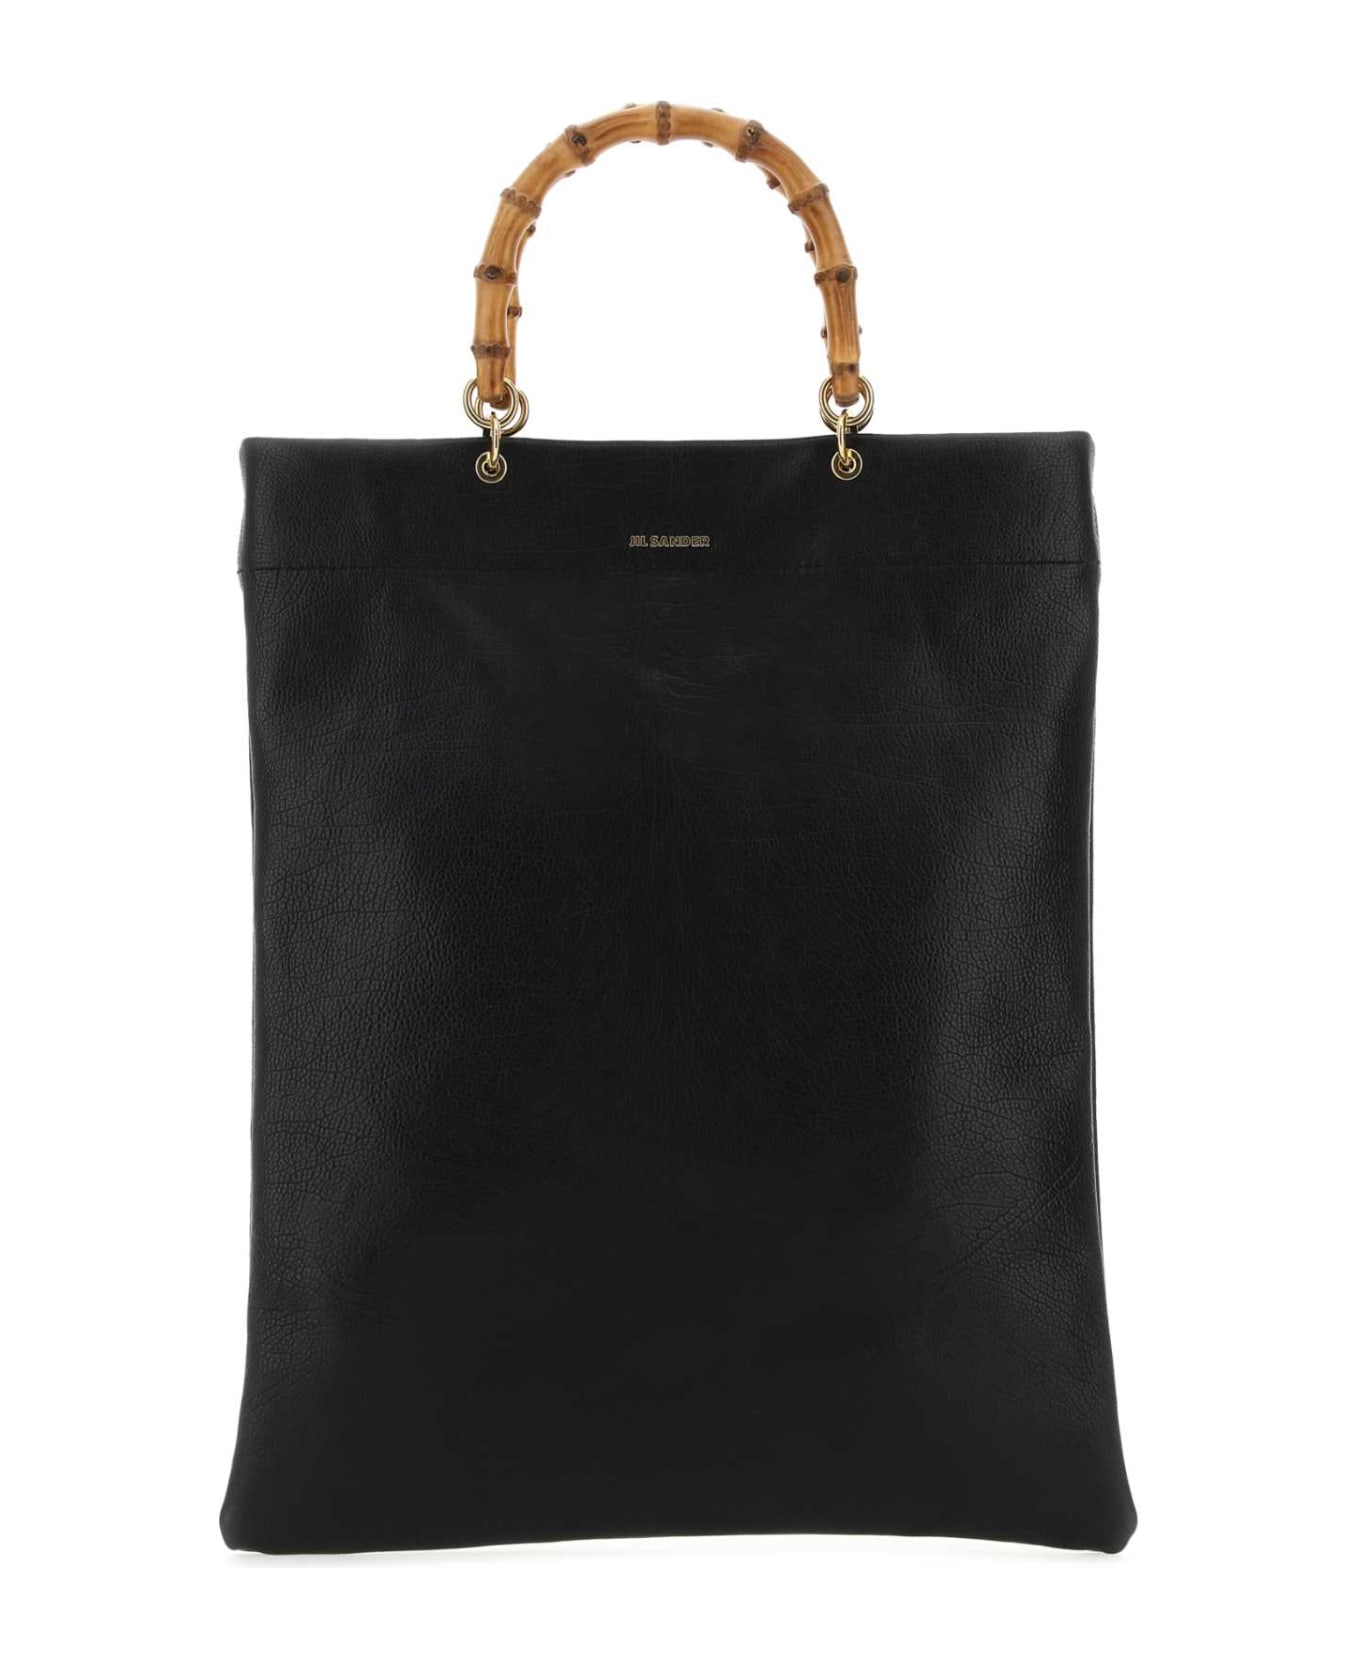 Jil Sander Black Leather Medium Shopping Bag - 001